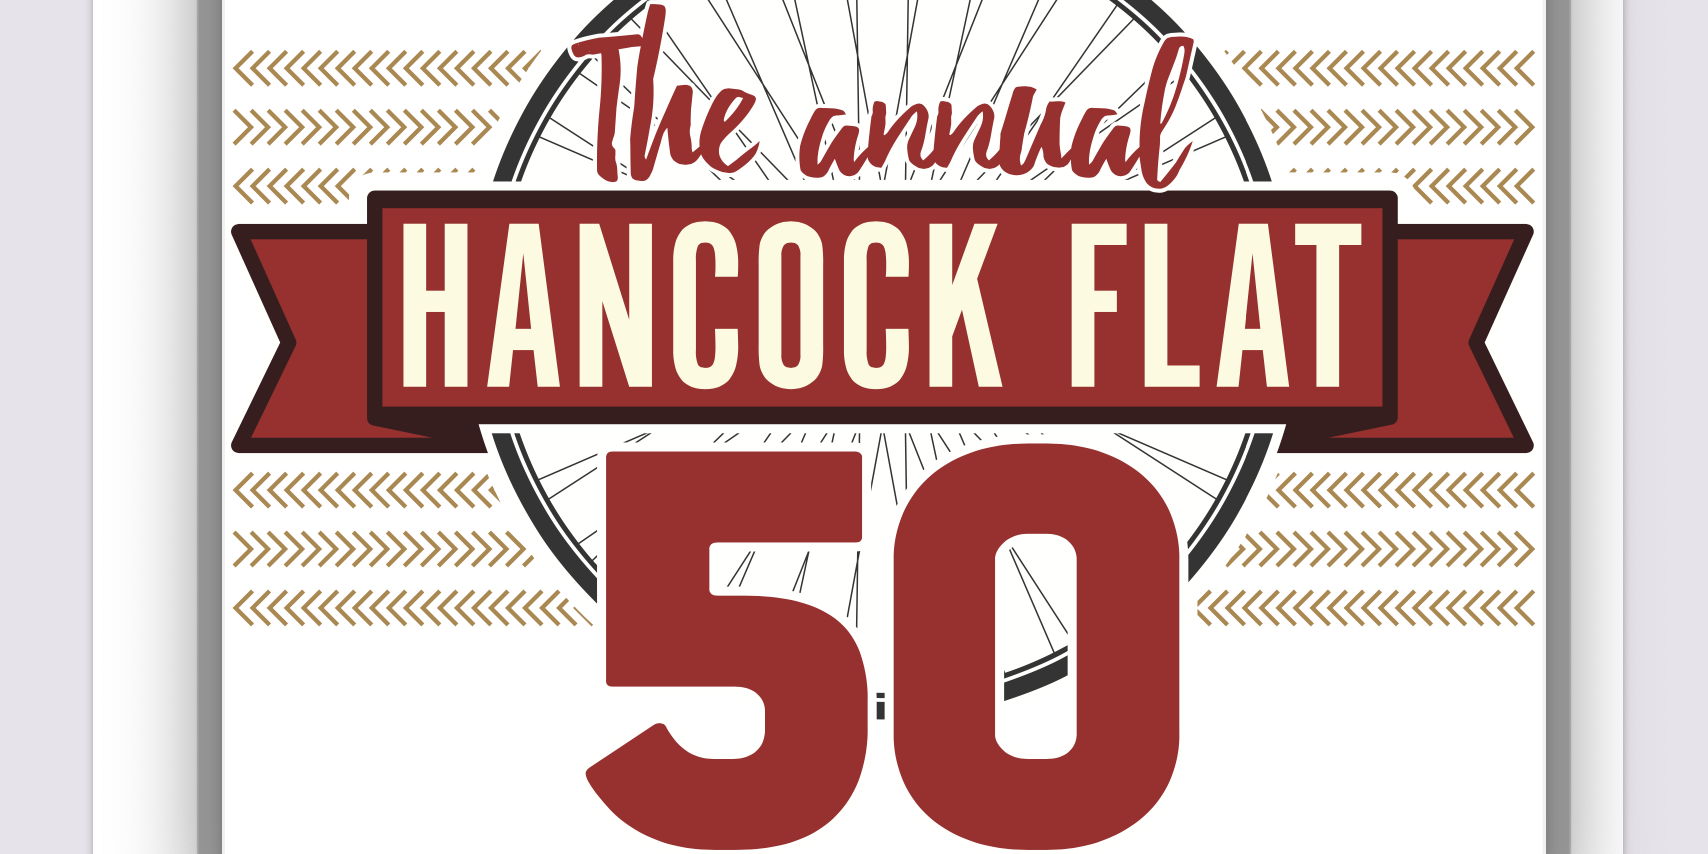 Hancock flat 50 promotional image